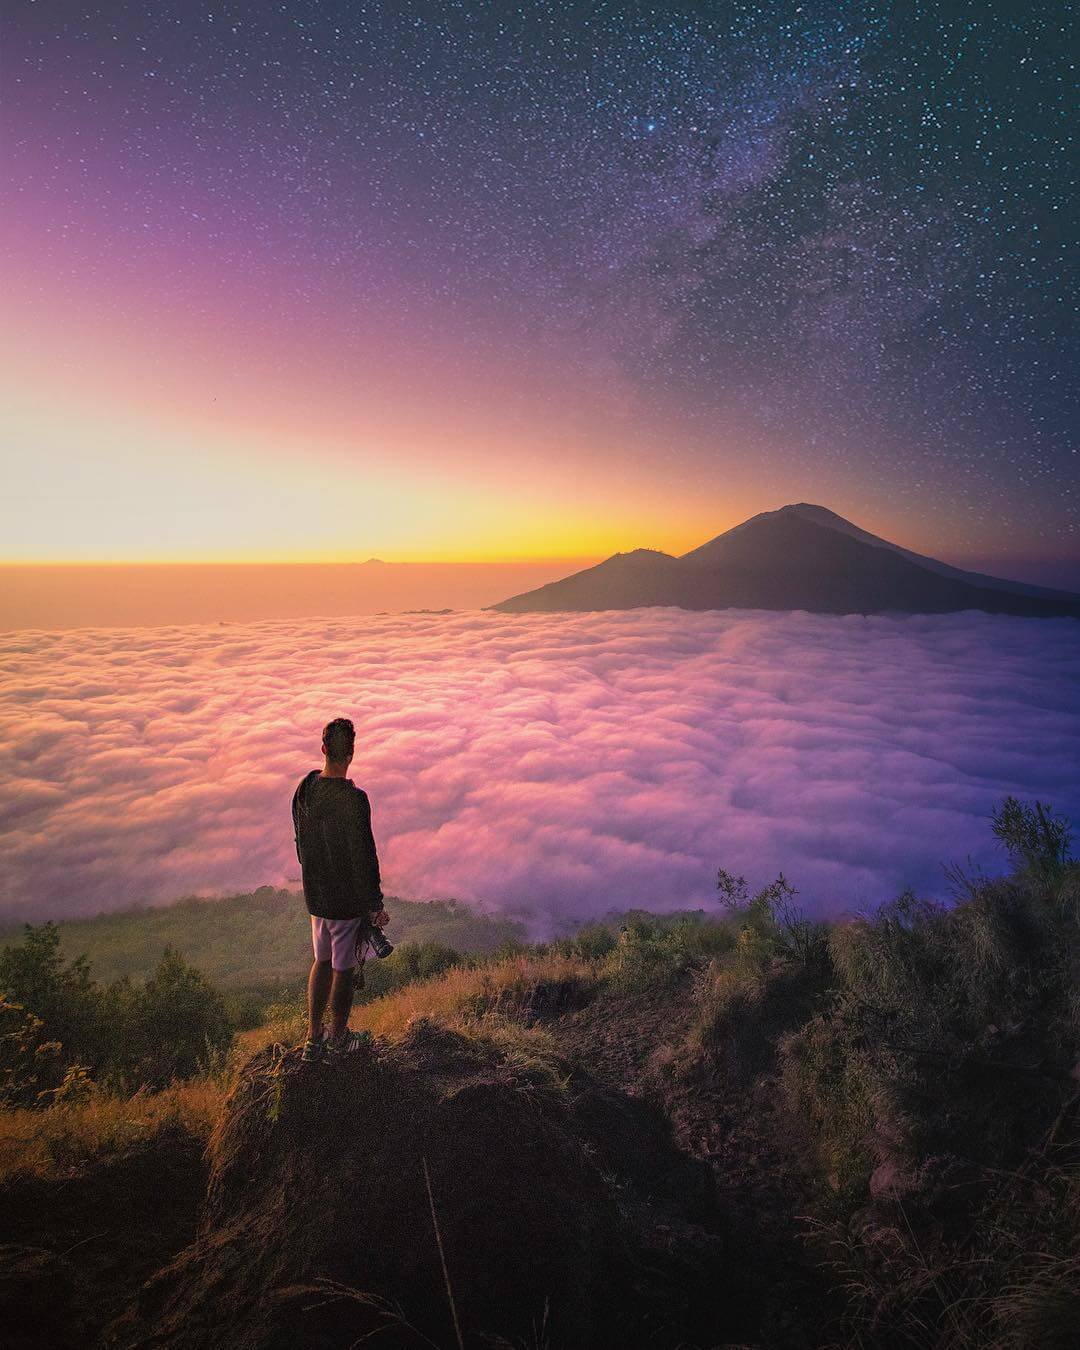 Want a Stunning Bali View? Get Starstruck at Mount Batur Viewpoint